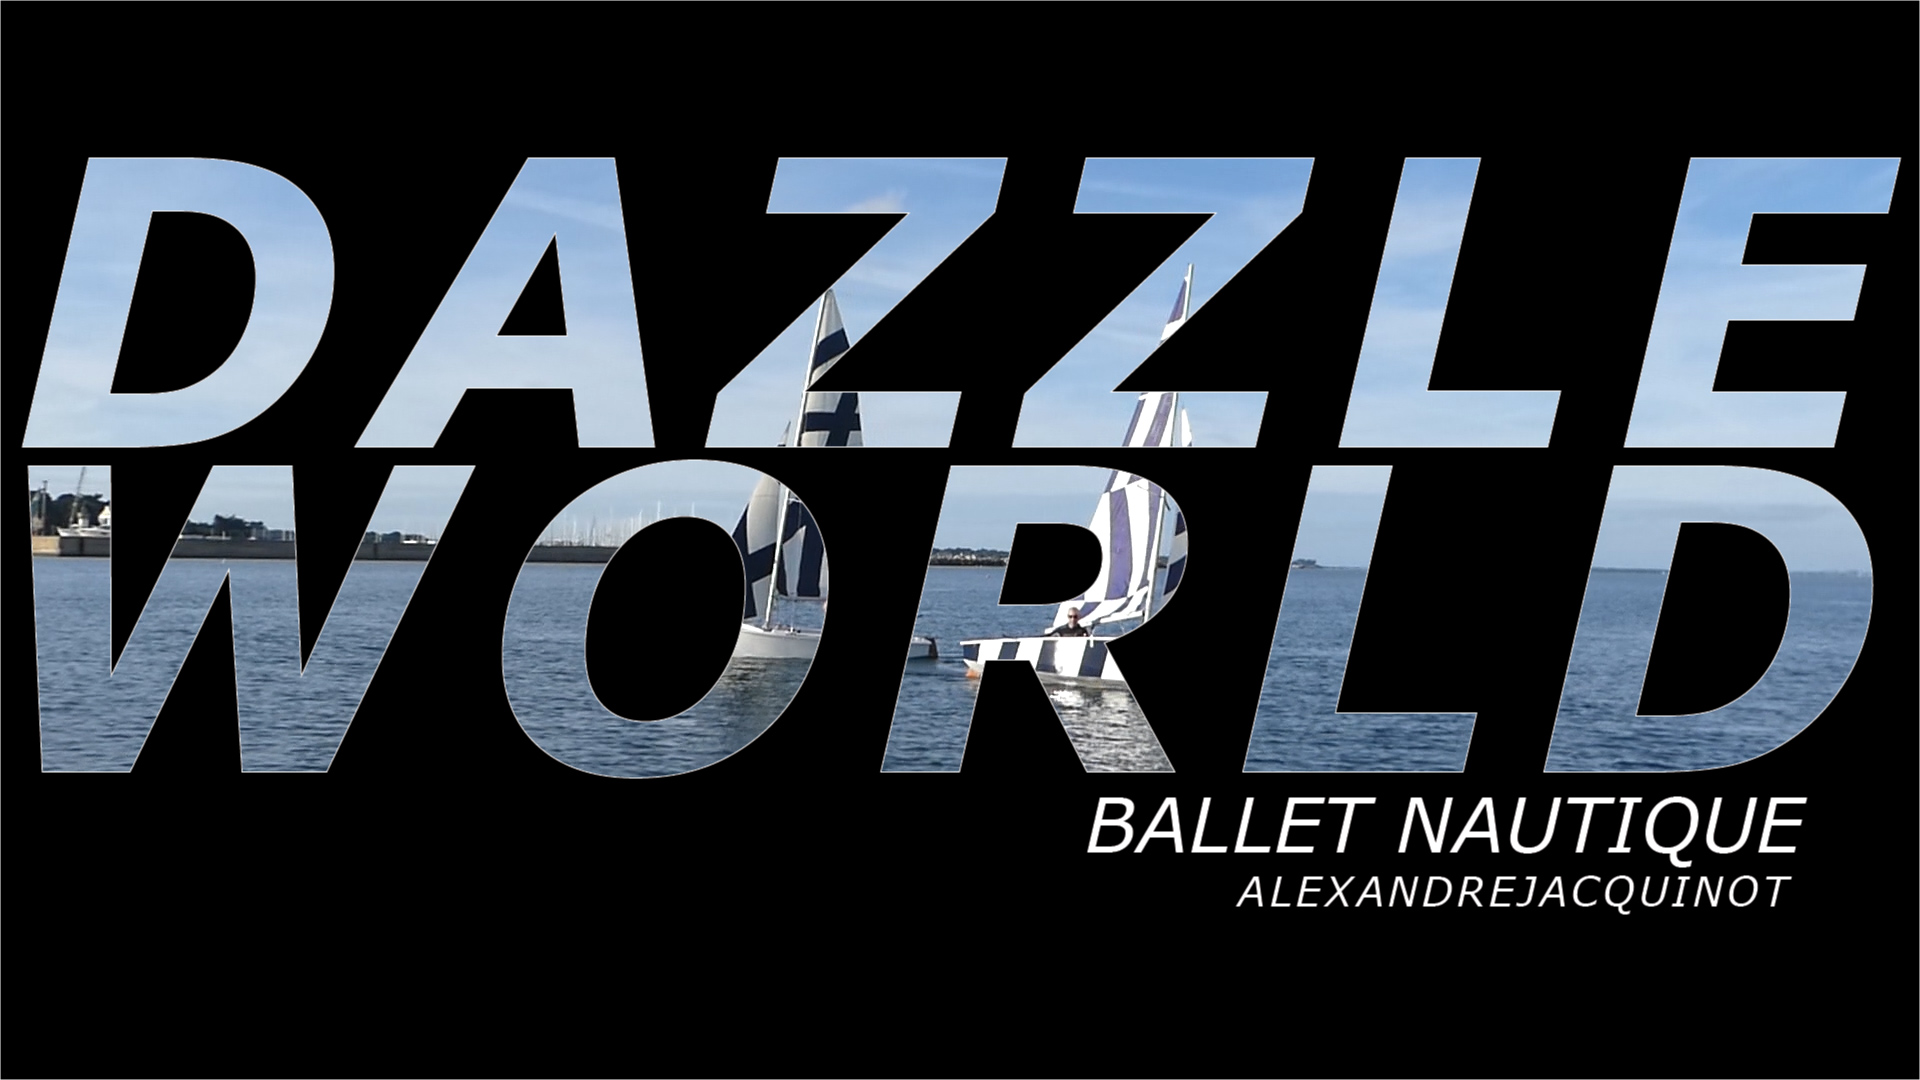 Ballet nautique Dazzle World